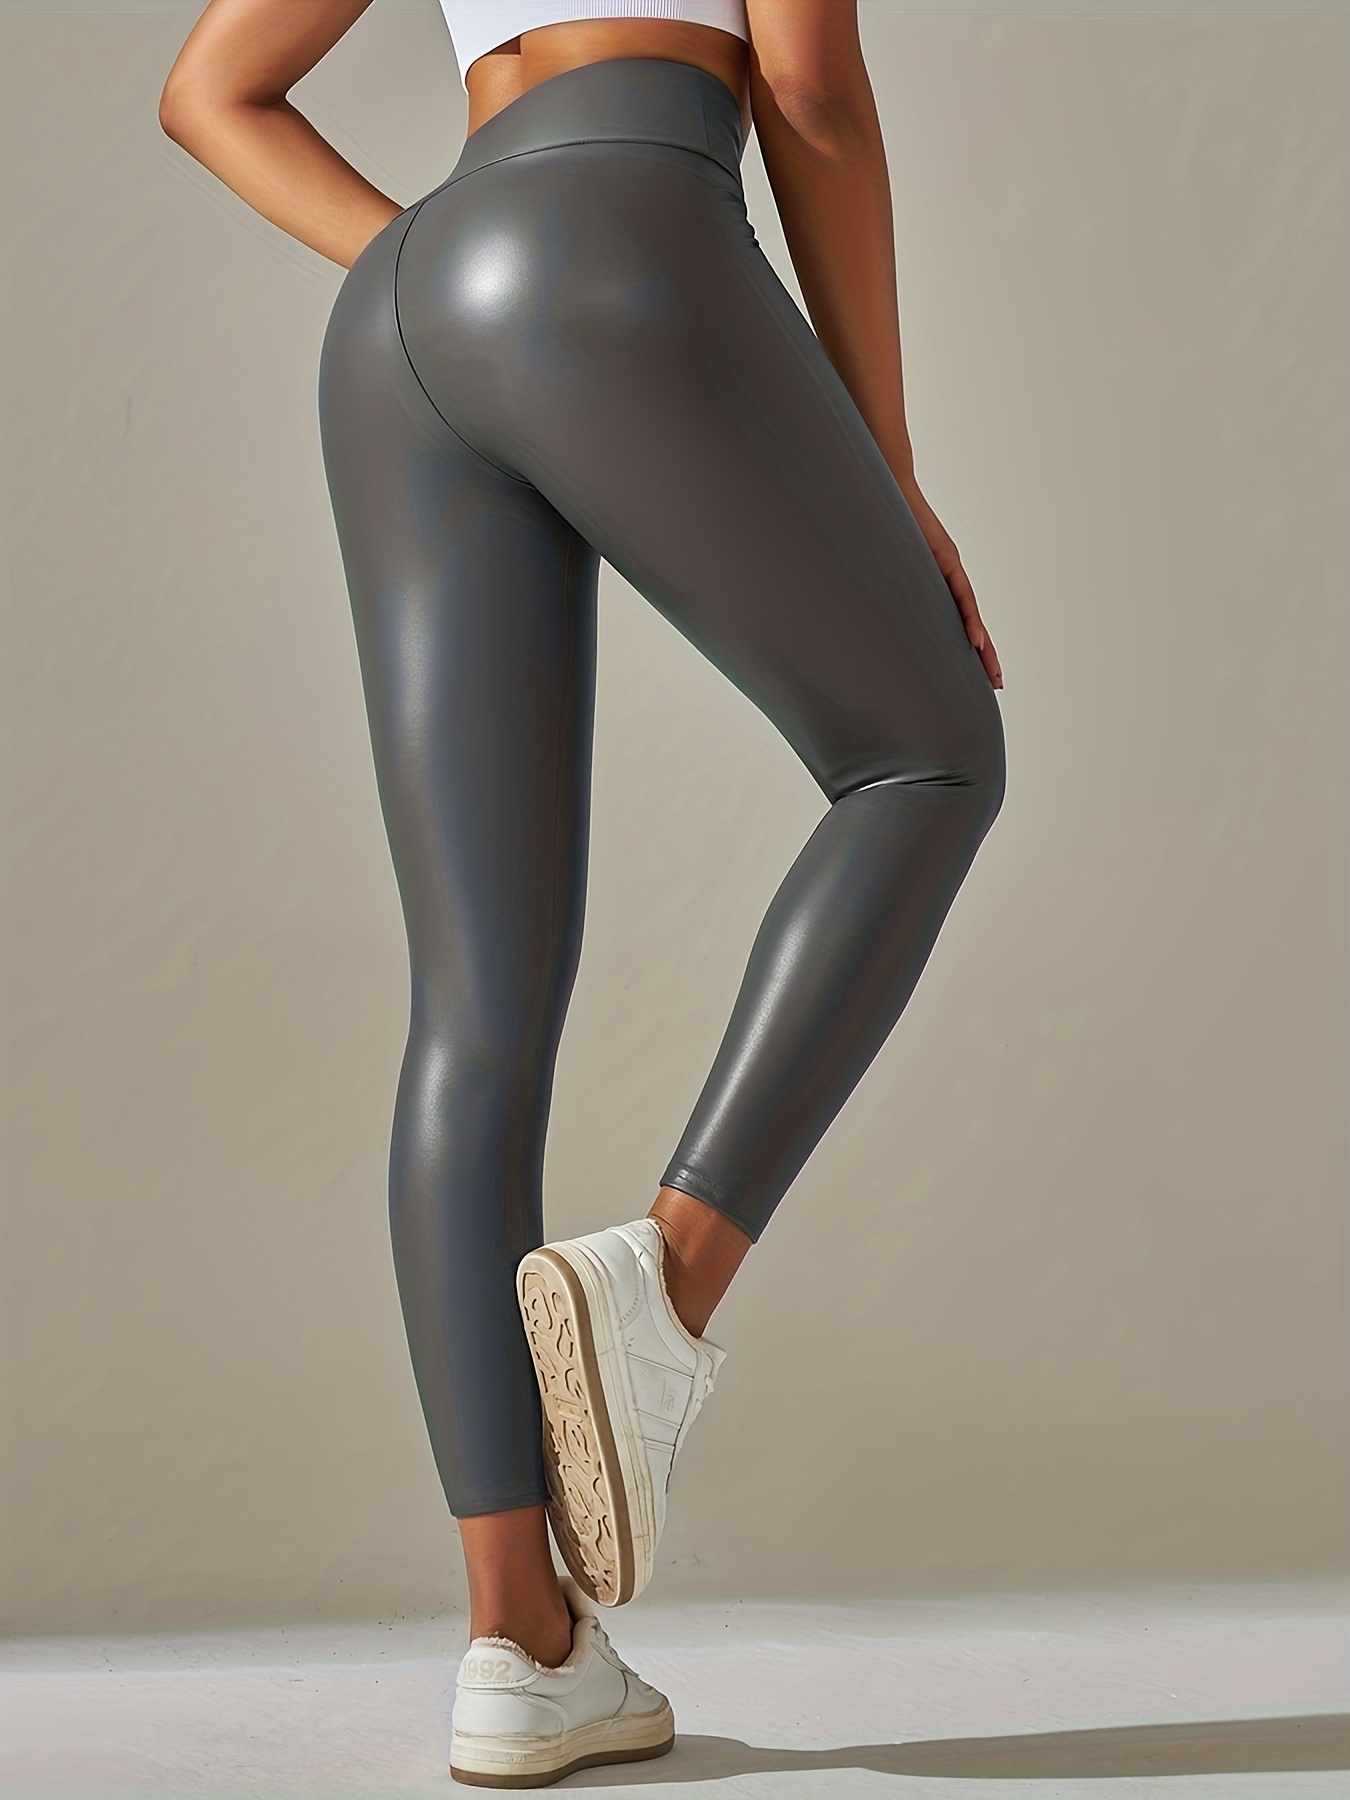 Lady Sport Leggings Shiny Skinny Stretchy Fitness Yoga Pants Trouser Casual  Slim